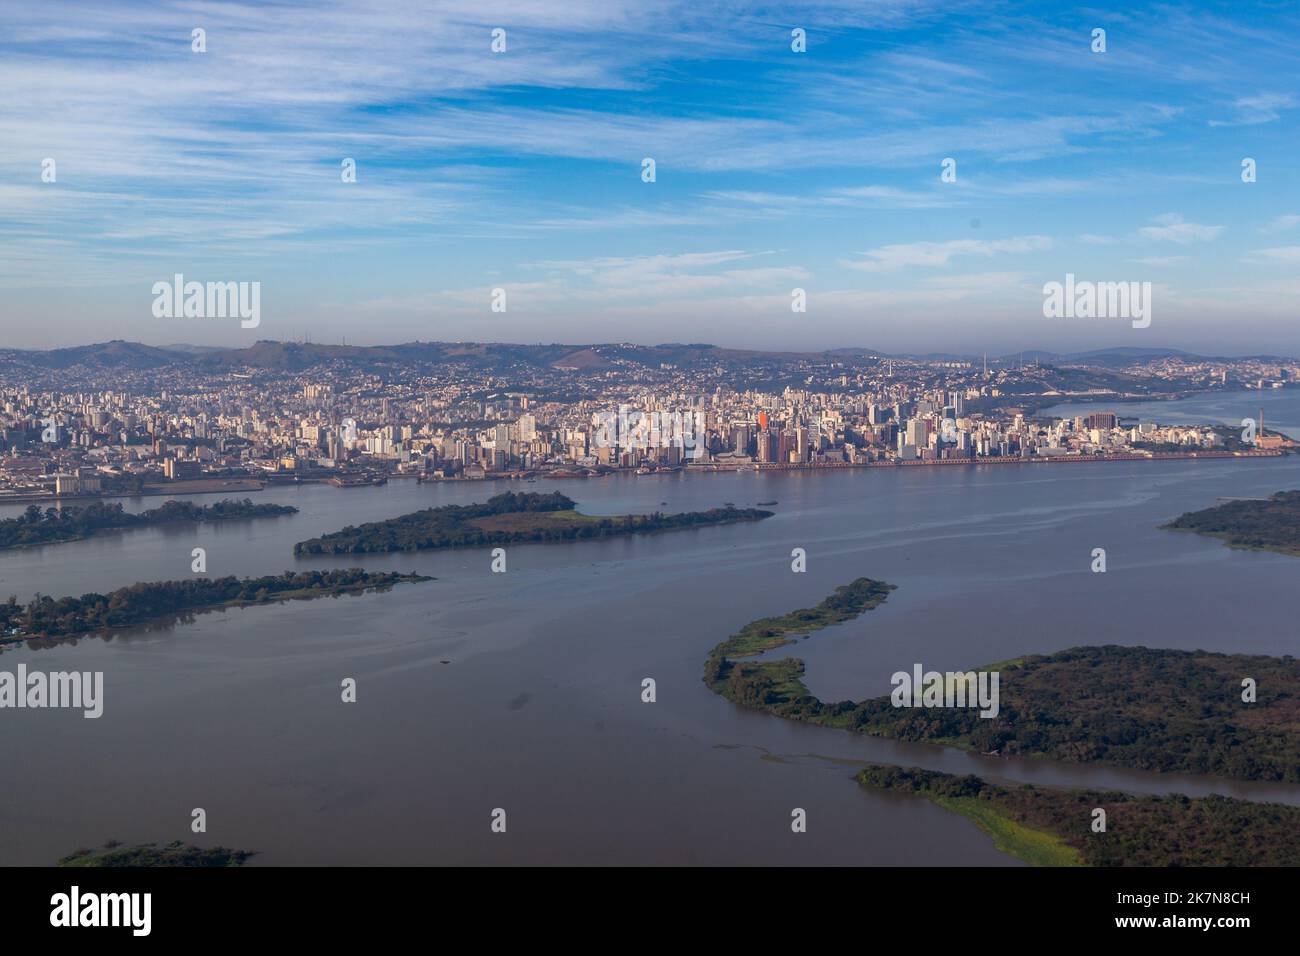 An aerial view of the City of Porto Alegre from the air, Rio Grande do Sul, Brazil Stock Photo